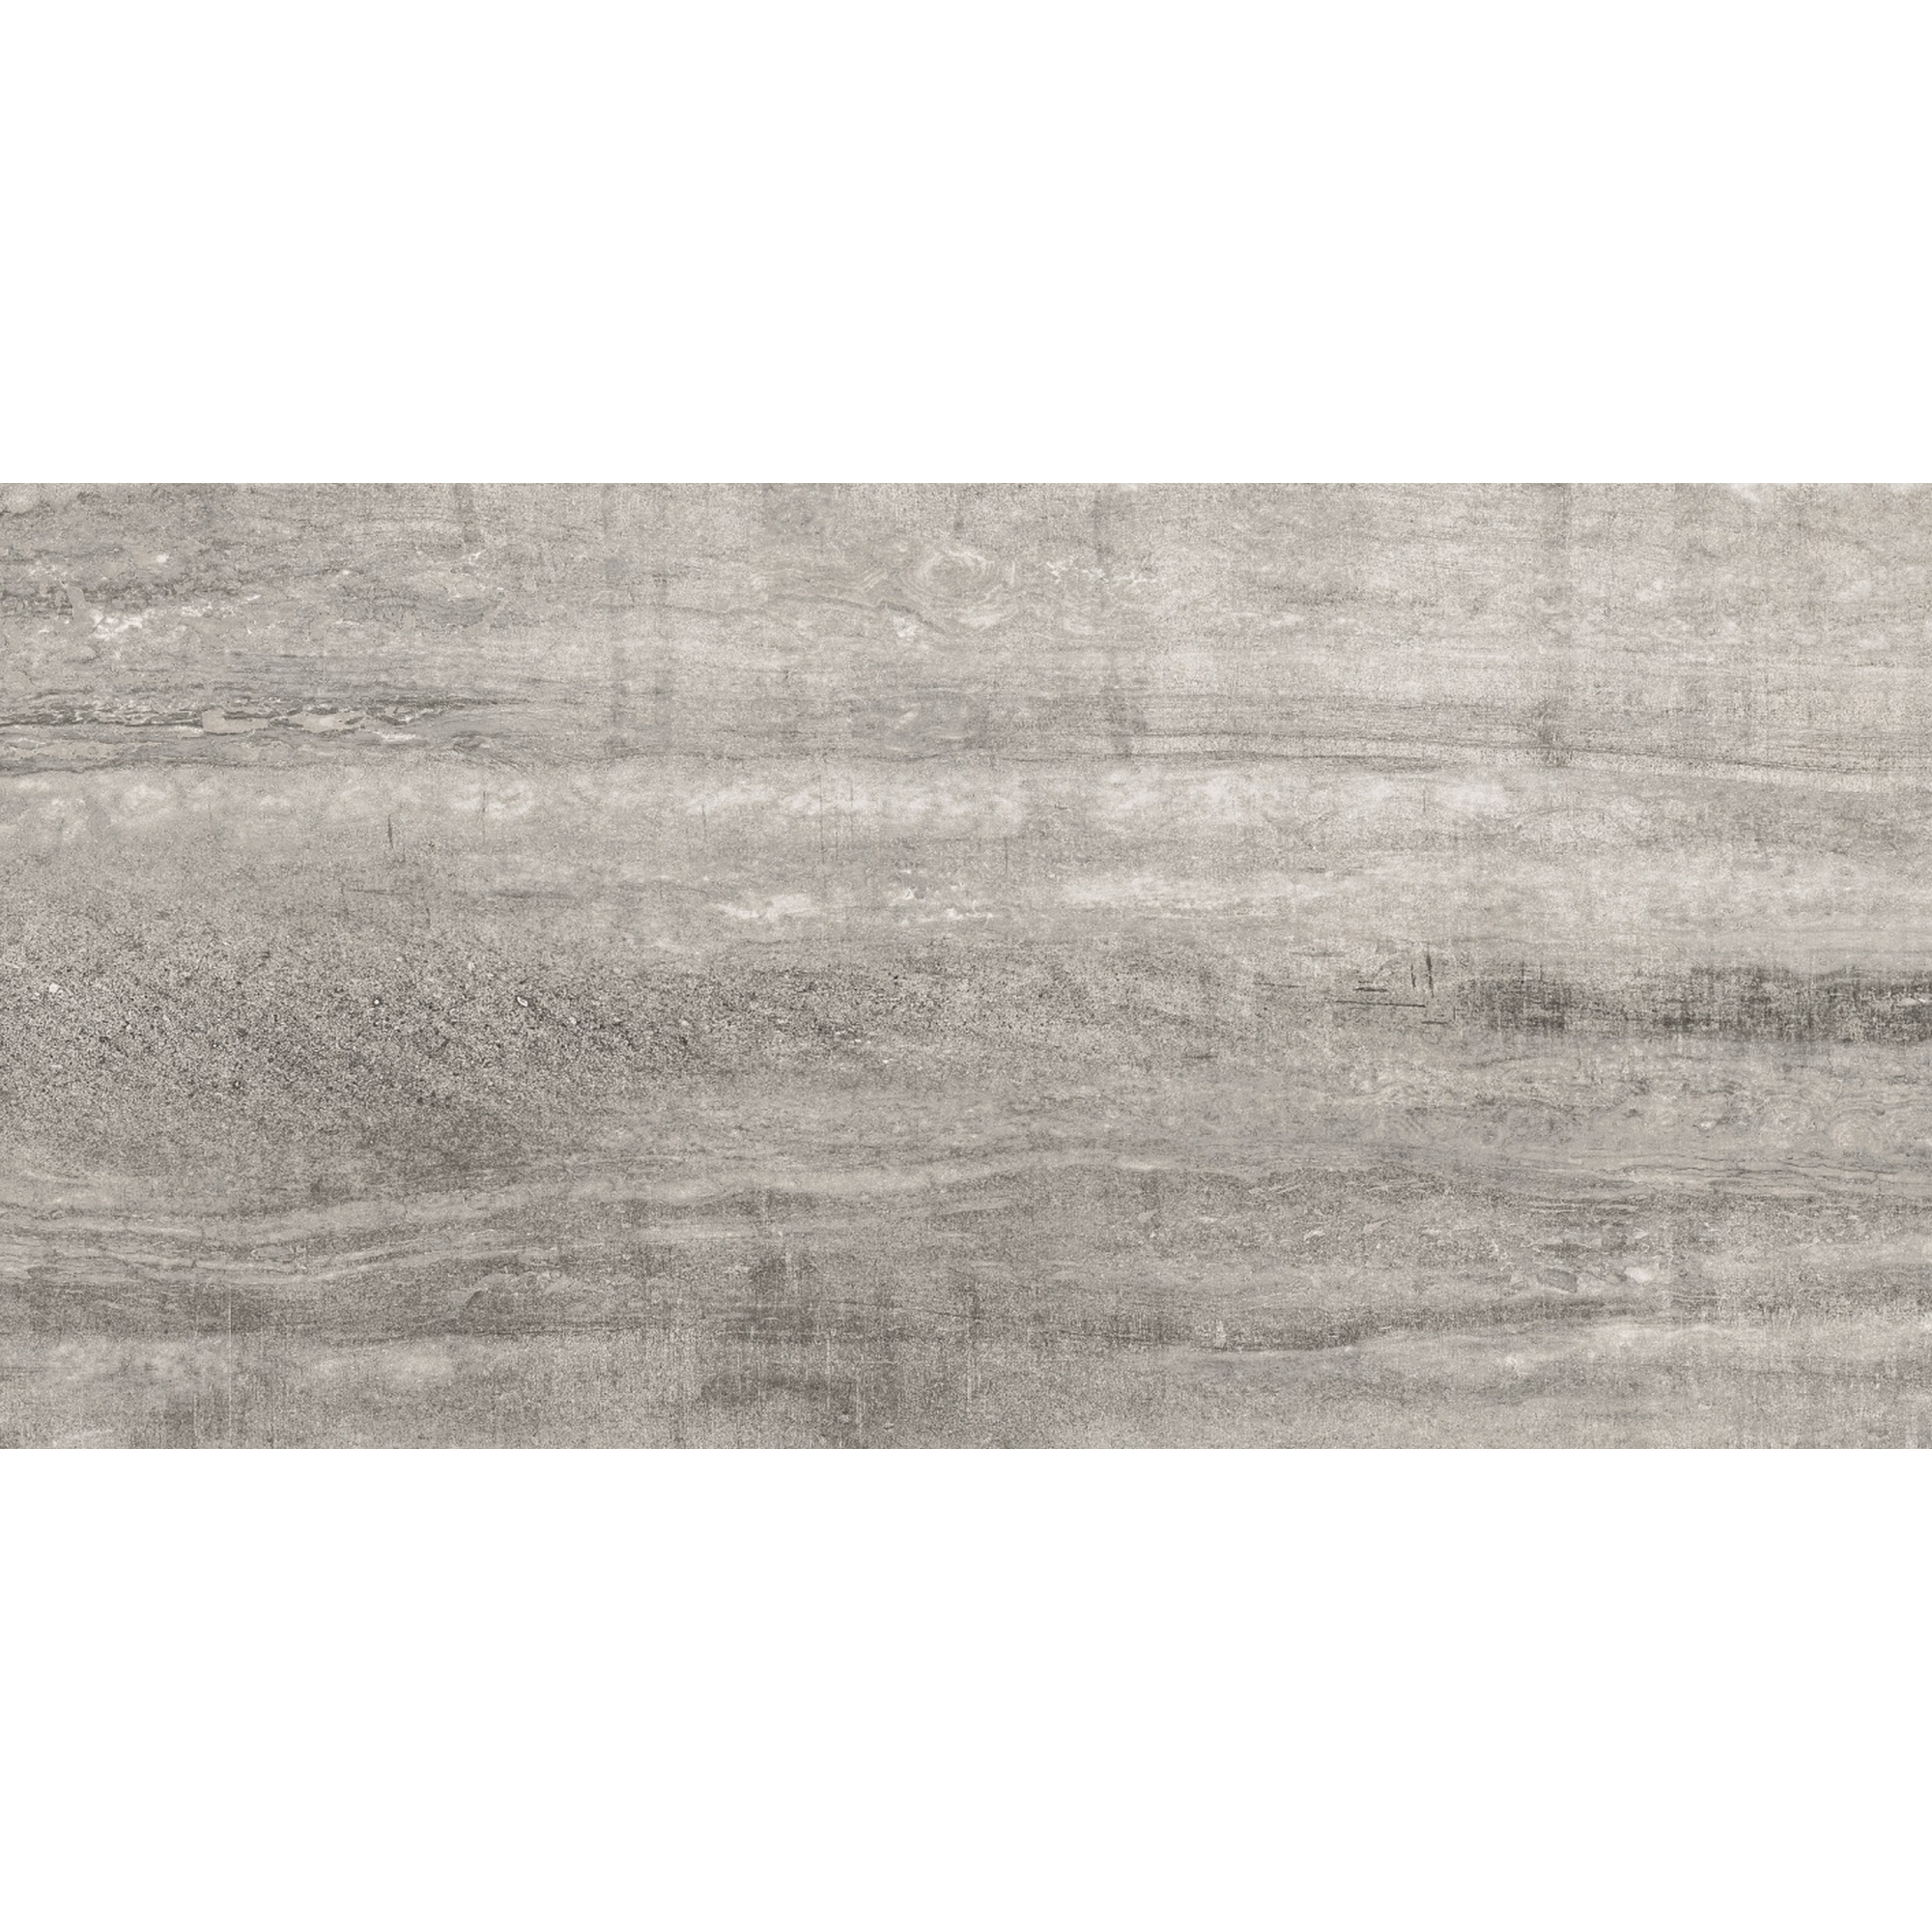 Bodenfliese 'Montreal' Feinsteinzeug hellgrau 31 x 62 cm + product picture